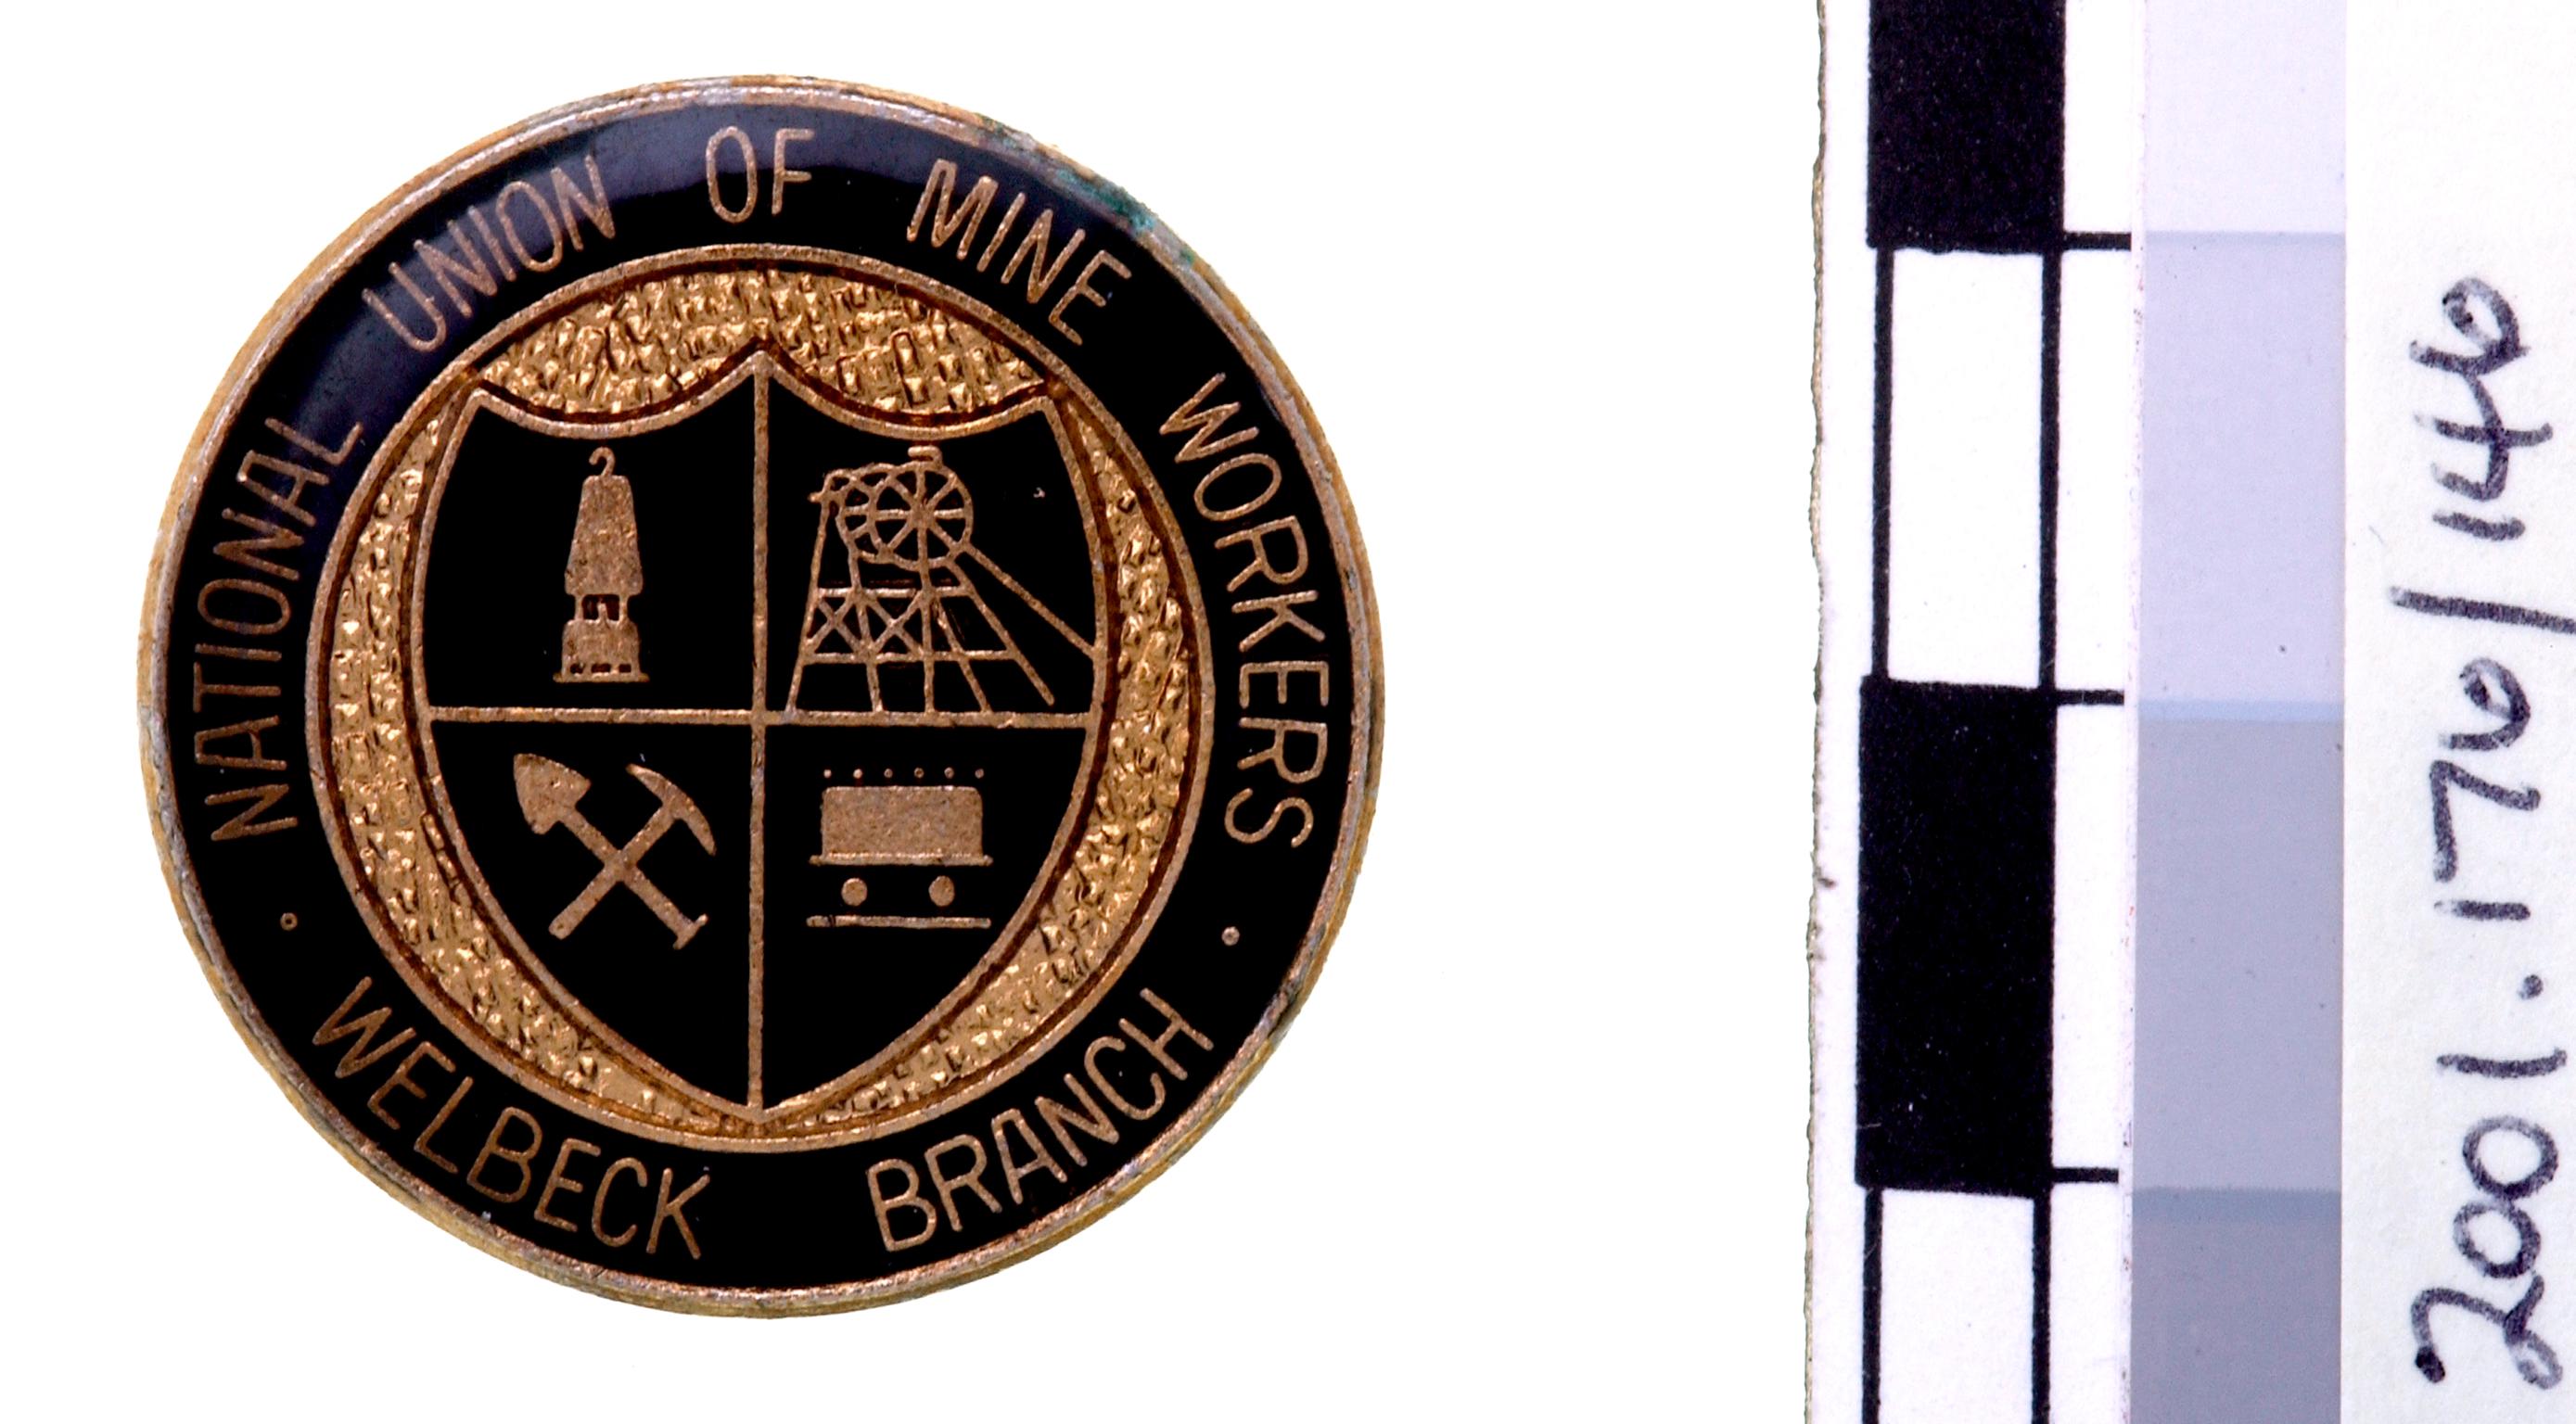 N.U.M. Nottingham, badge